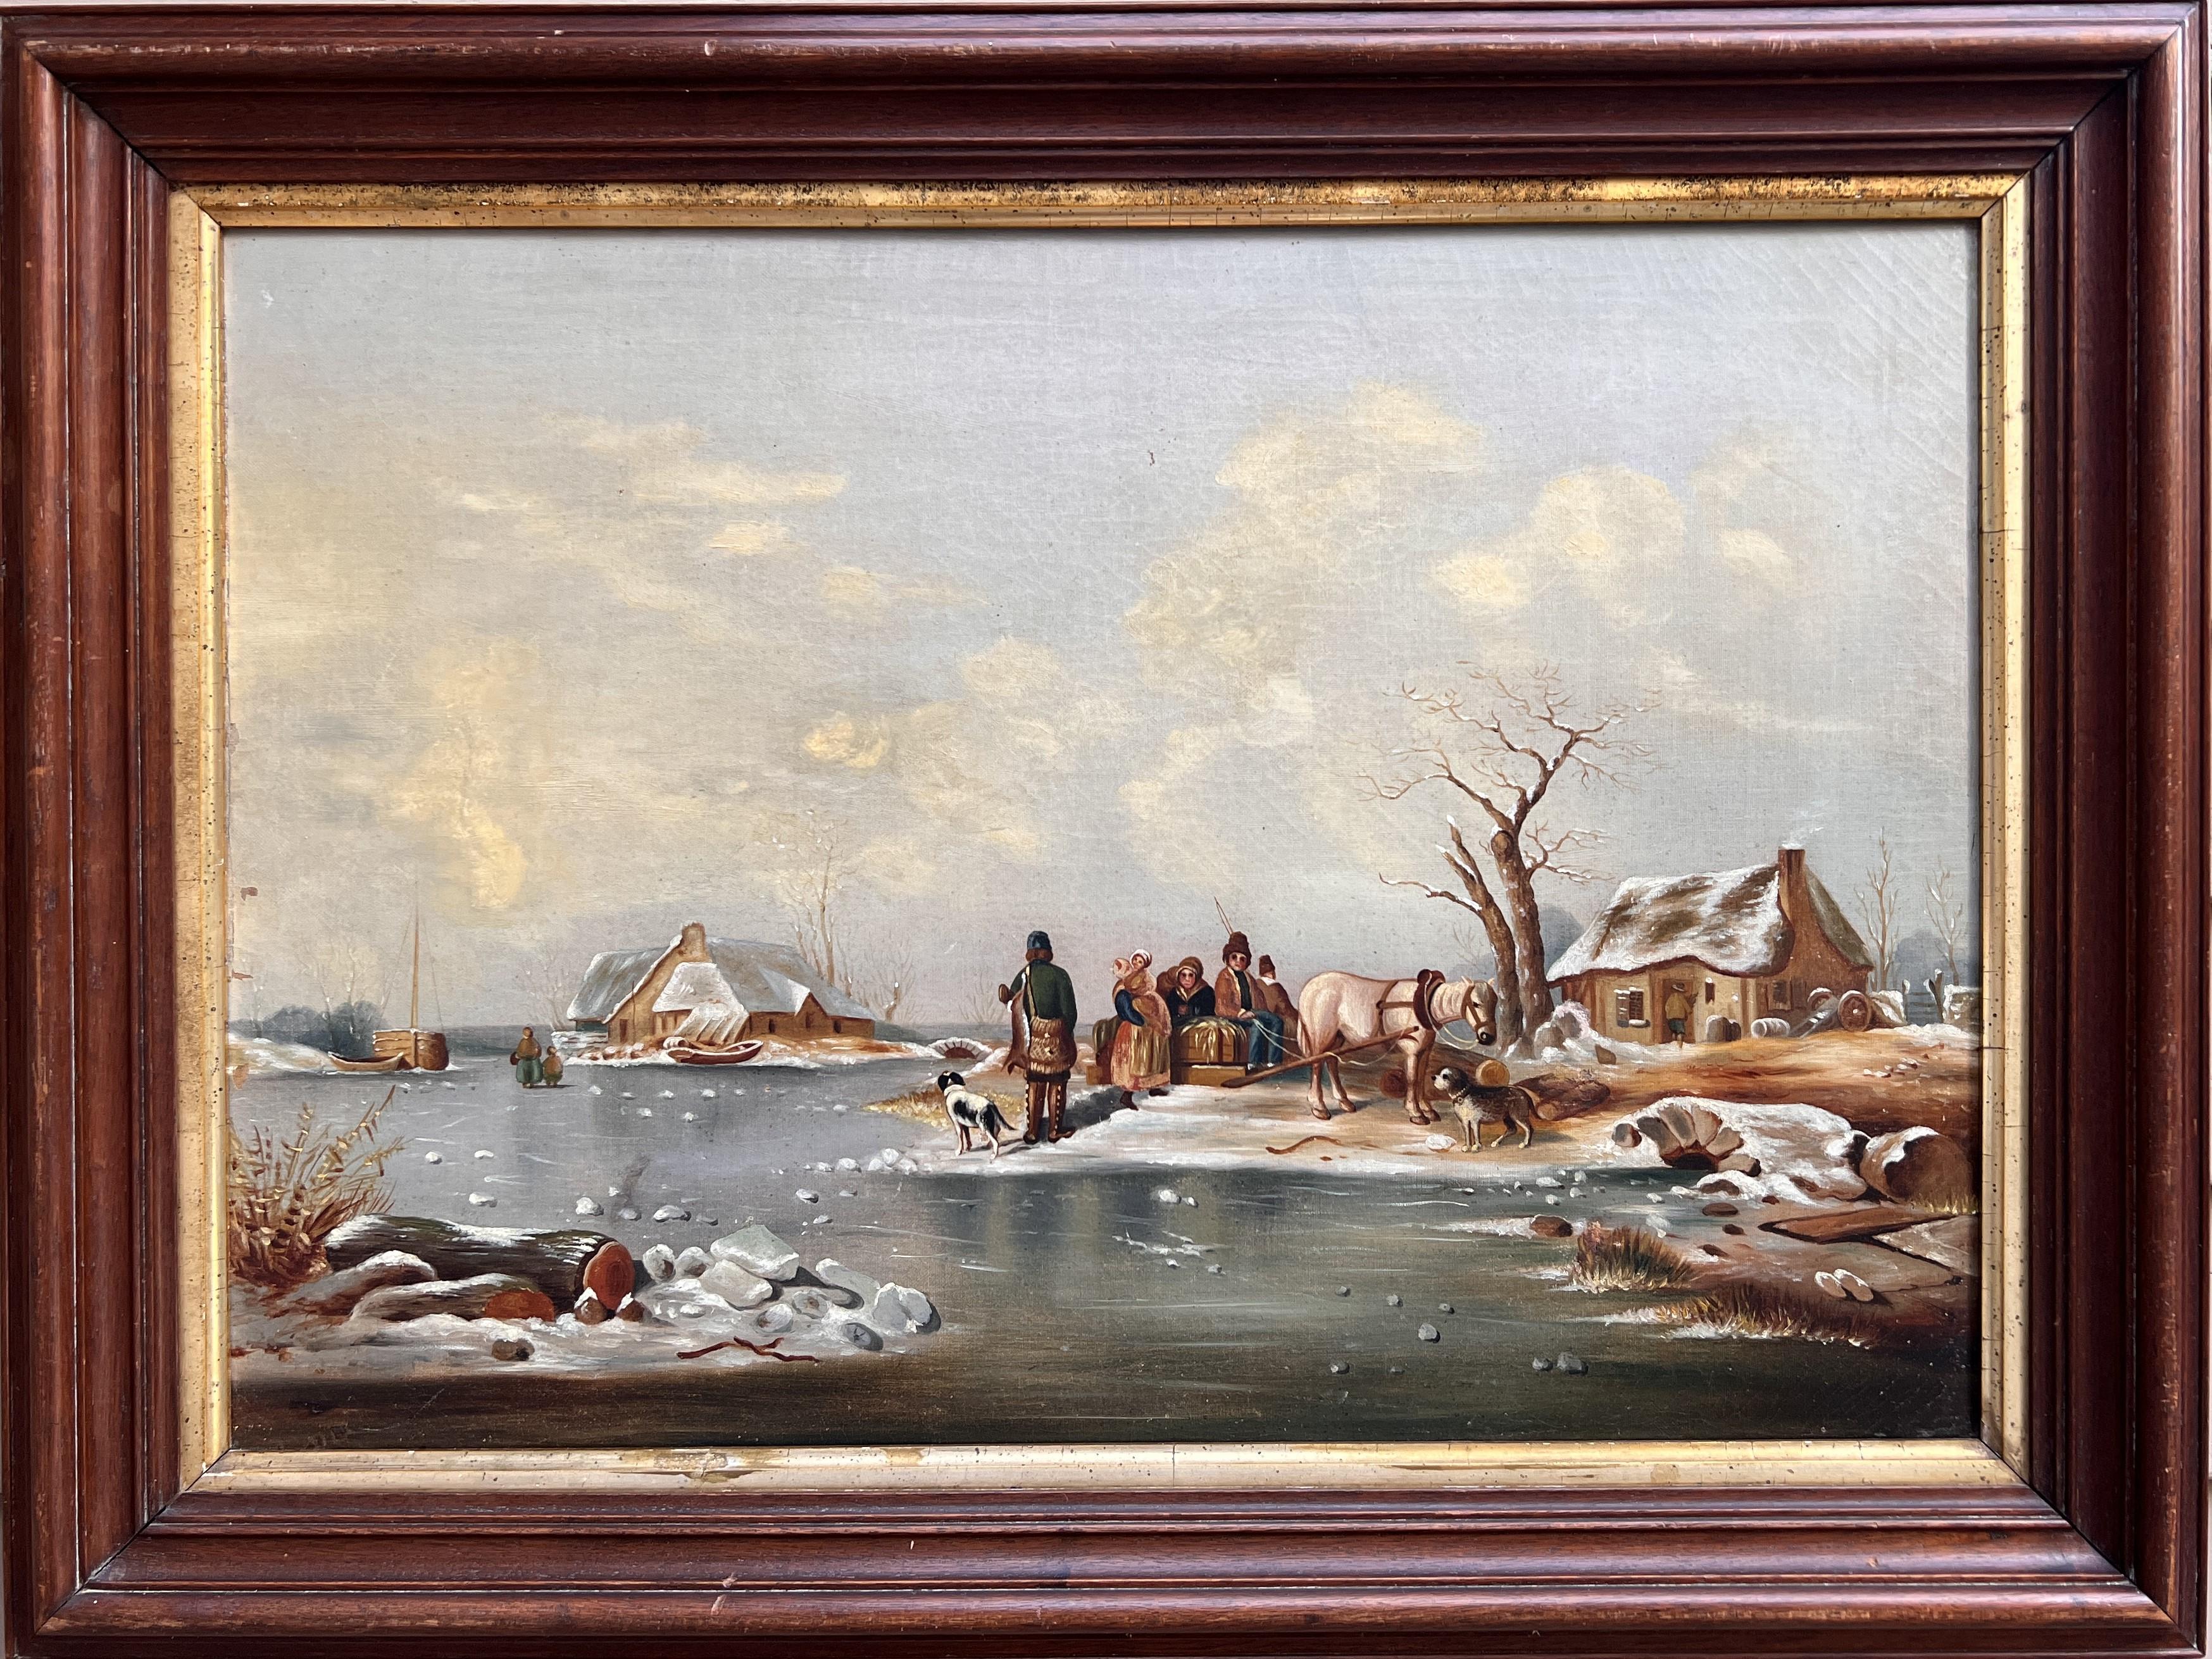 Unknown Landscape Painting - Antique oil painting on canvas, Winter Landscape, Village, figures. Framed